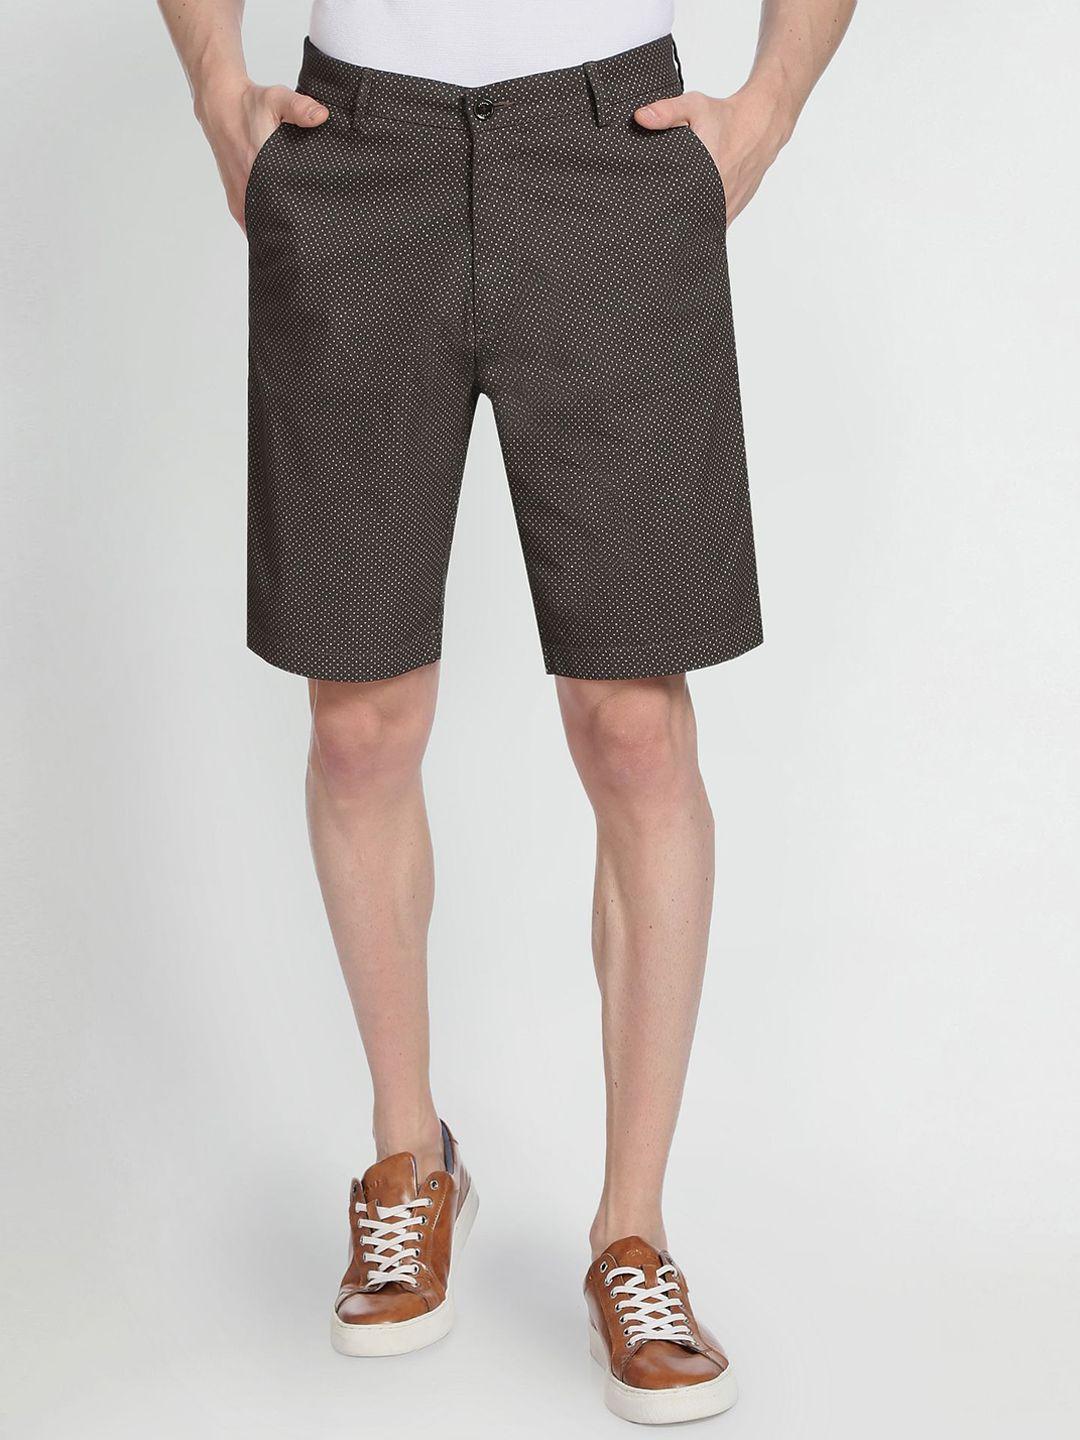 arrow-sport-men-mid-rise-printed-chino-shorts